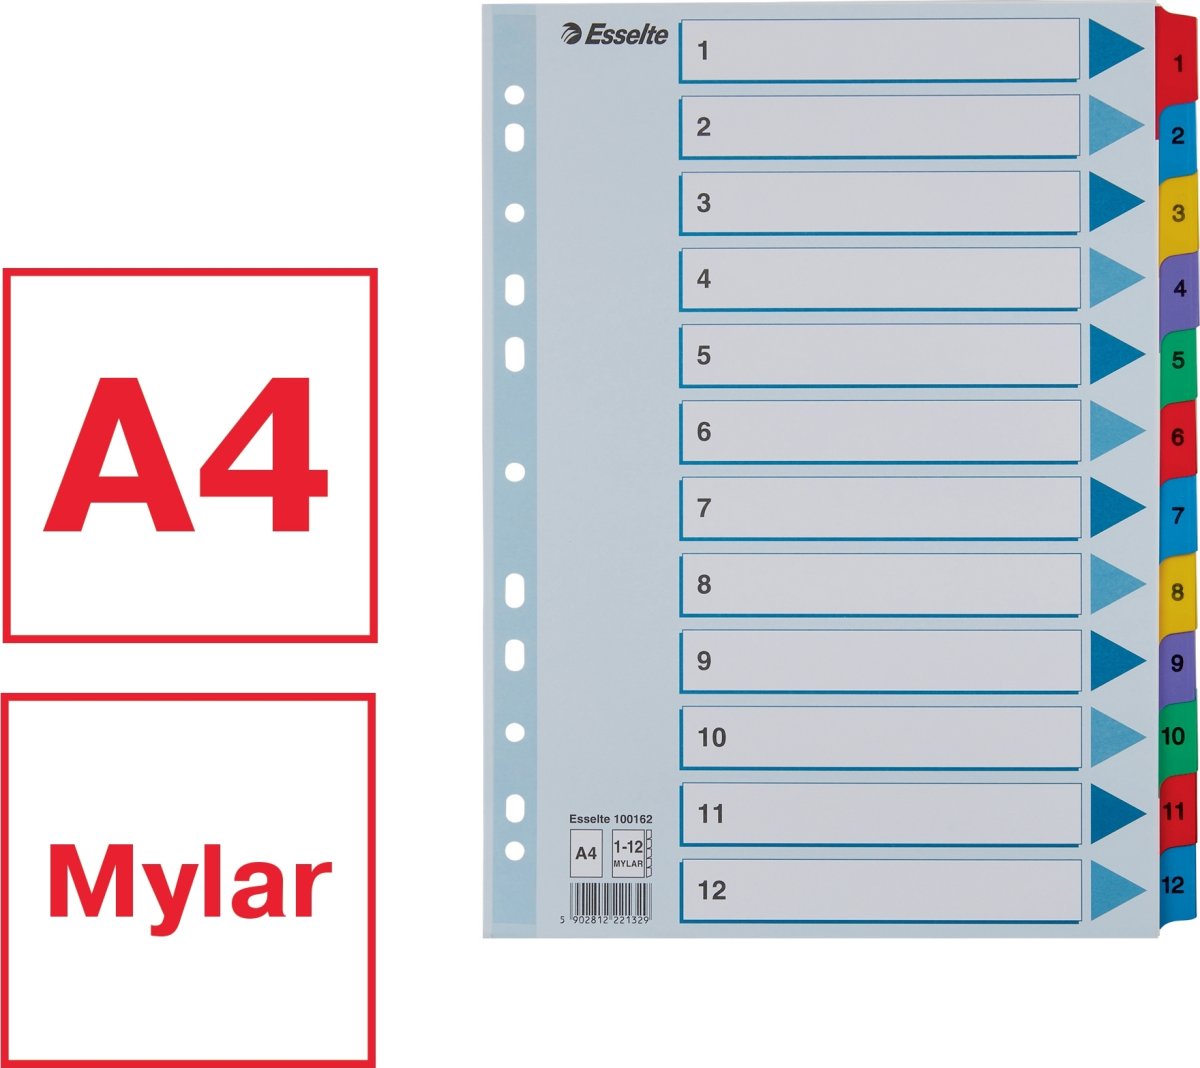 Register Esselte Mylar A4 1-12